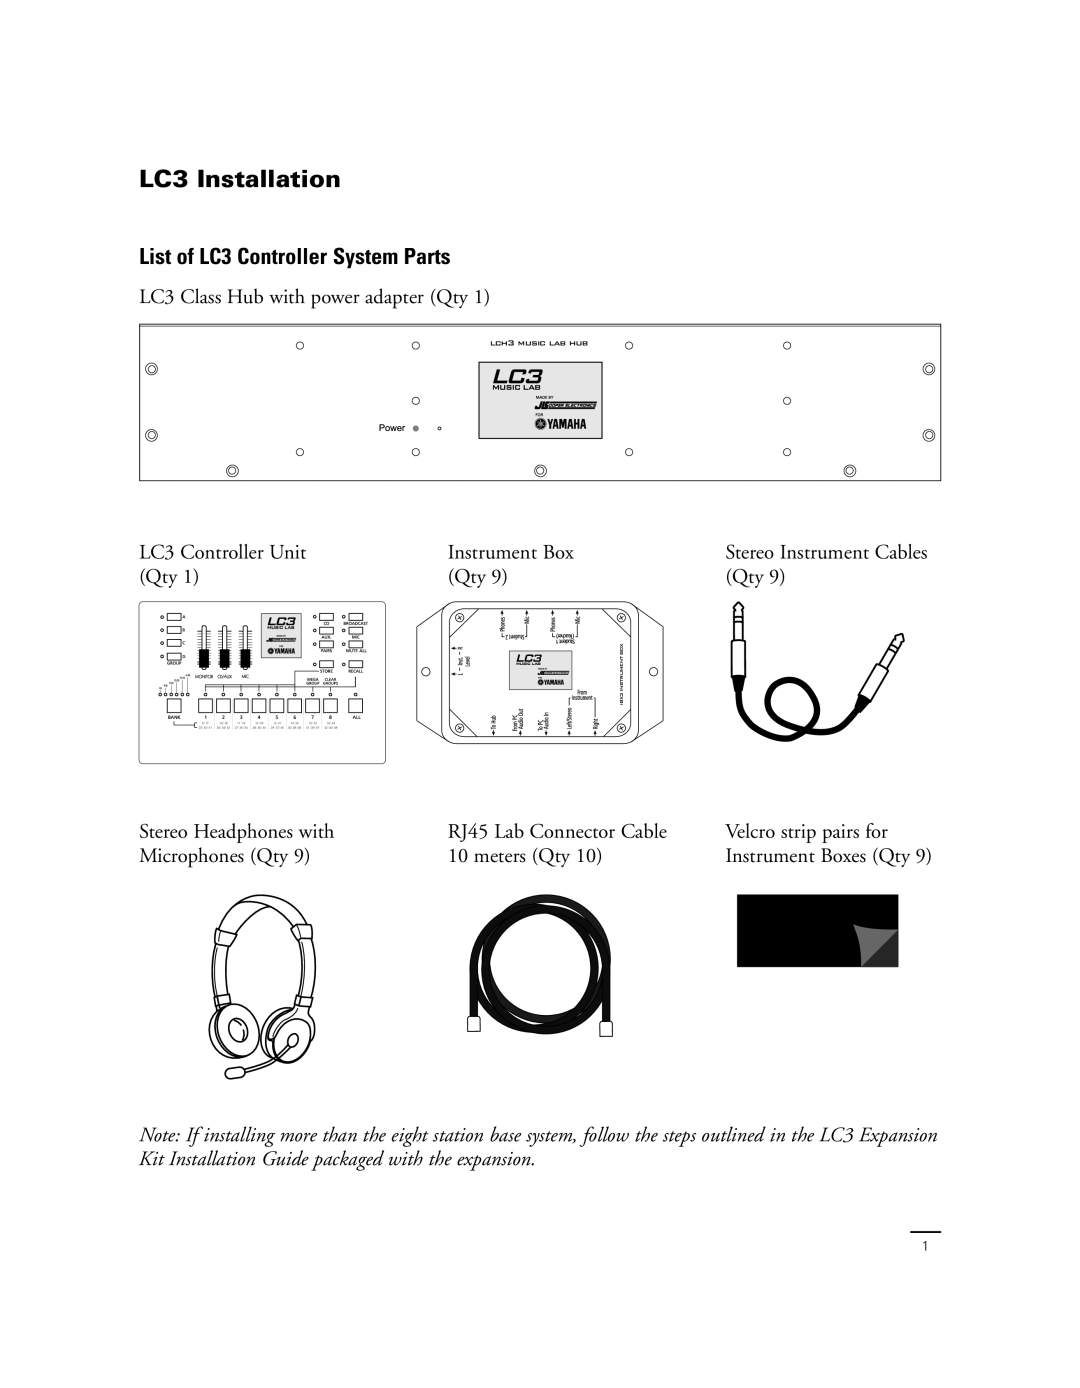 Yamaha Yamaha Music Lab manual List of LC3 Controller System Parts, LC3 Installation 